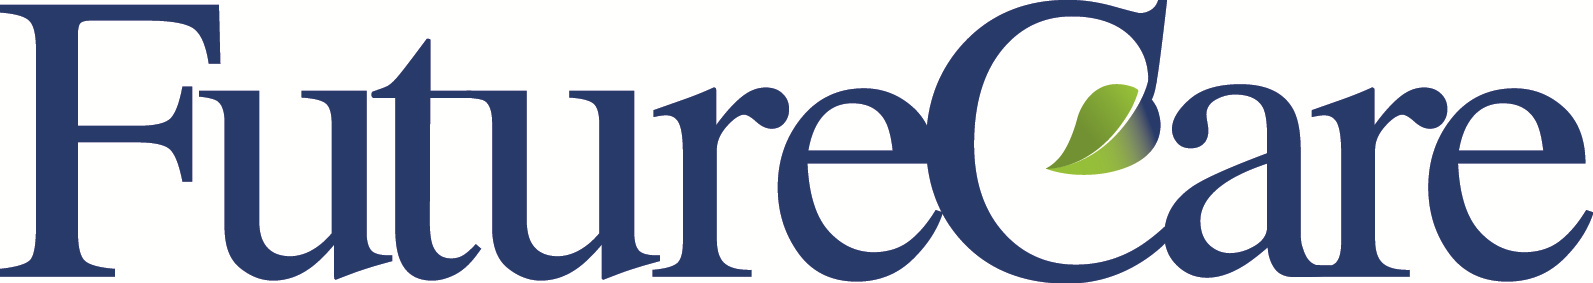 FutureCare Company Logo